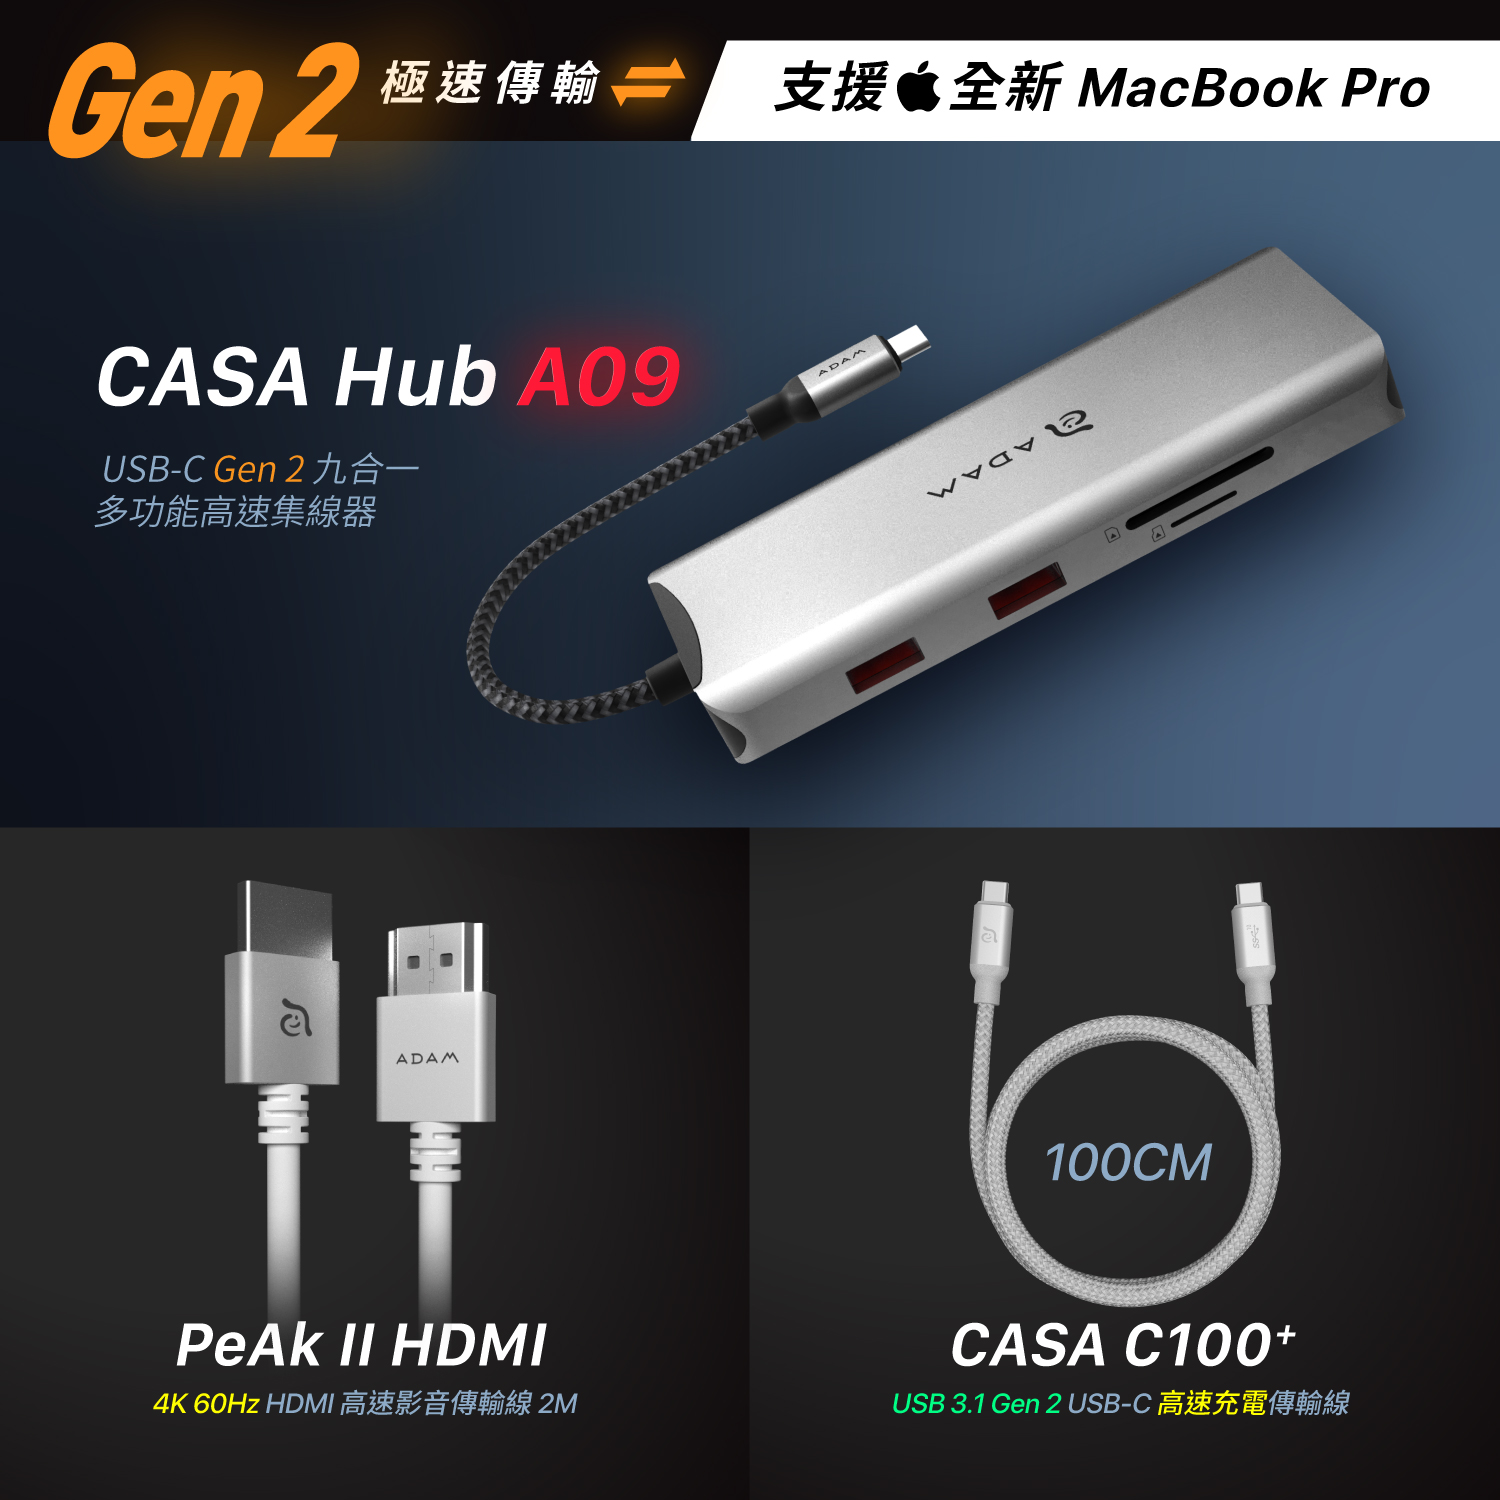 CASA Hub A09 USB-C Gen2 九合一多功能高速集線器_PeAk II HDMI 高速影音傳輸線 2M_CASA C100+ USB3.1 Gen 2 USB-C 100W 高速充電視訊傳輸線